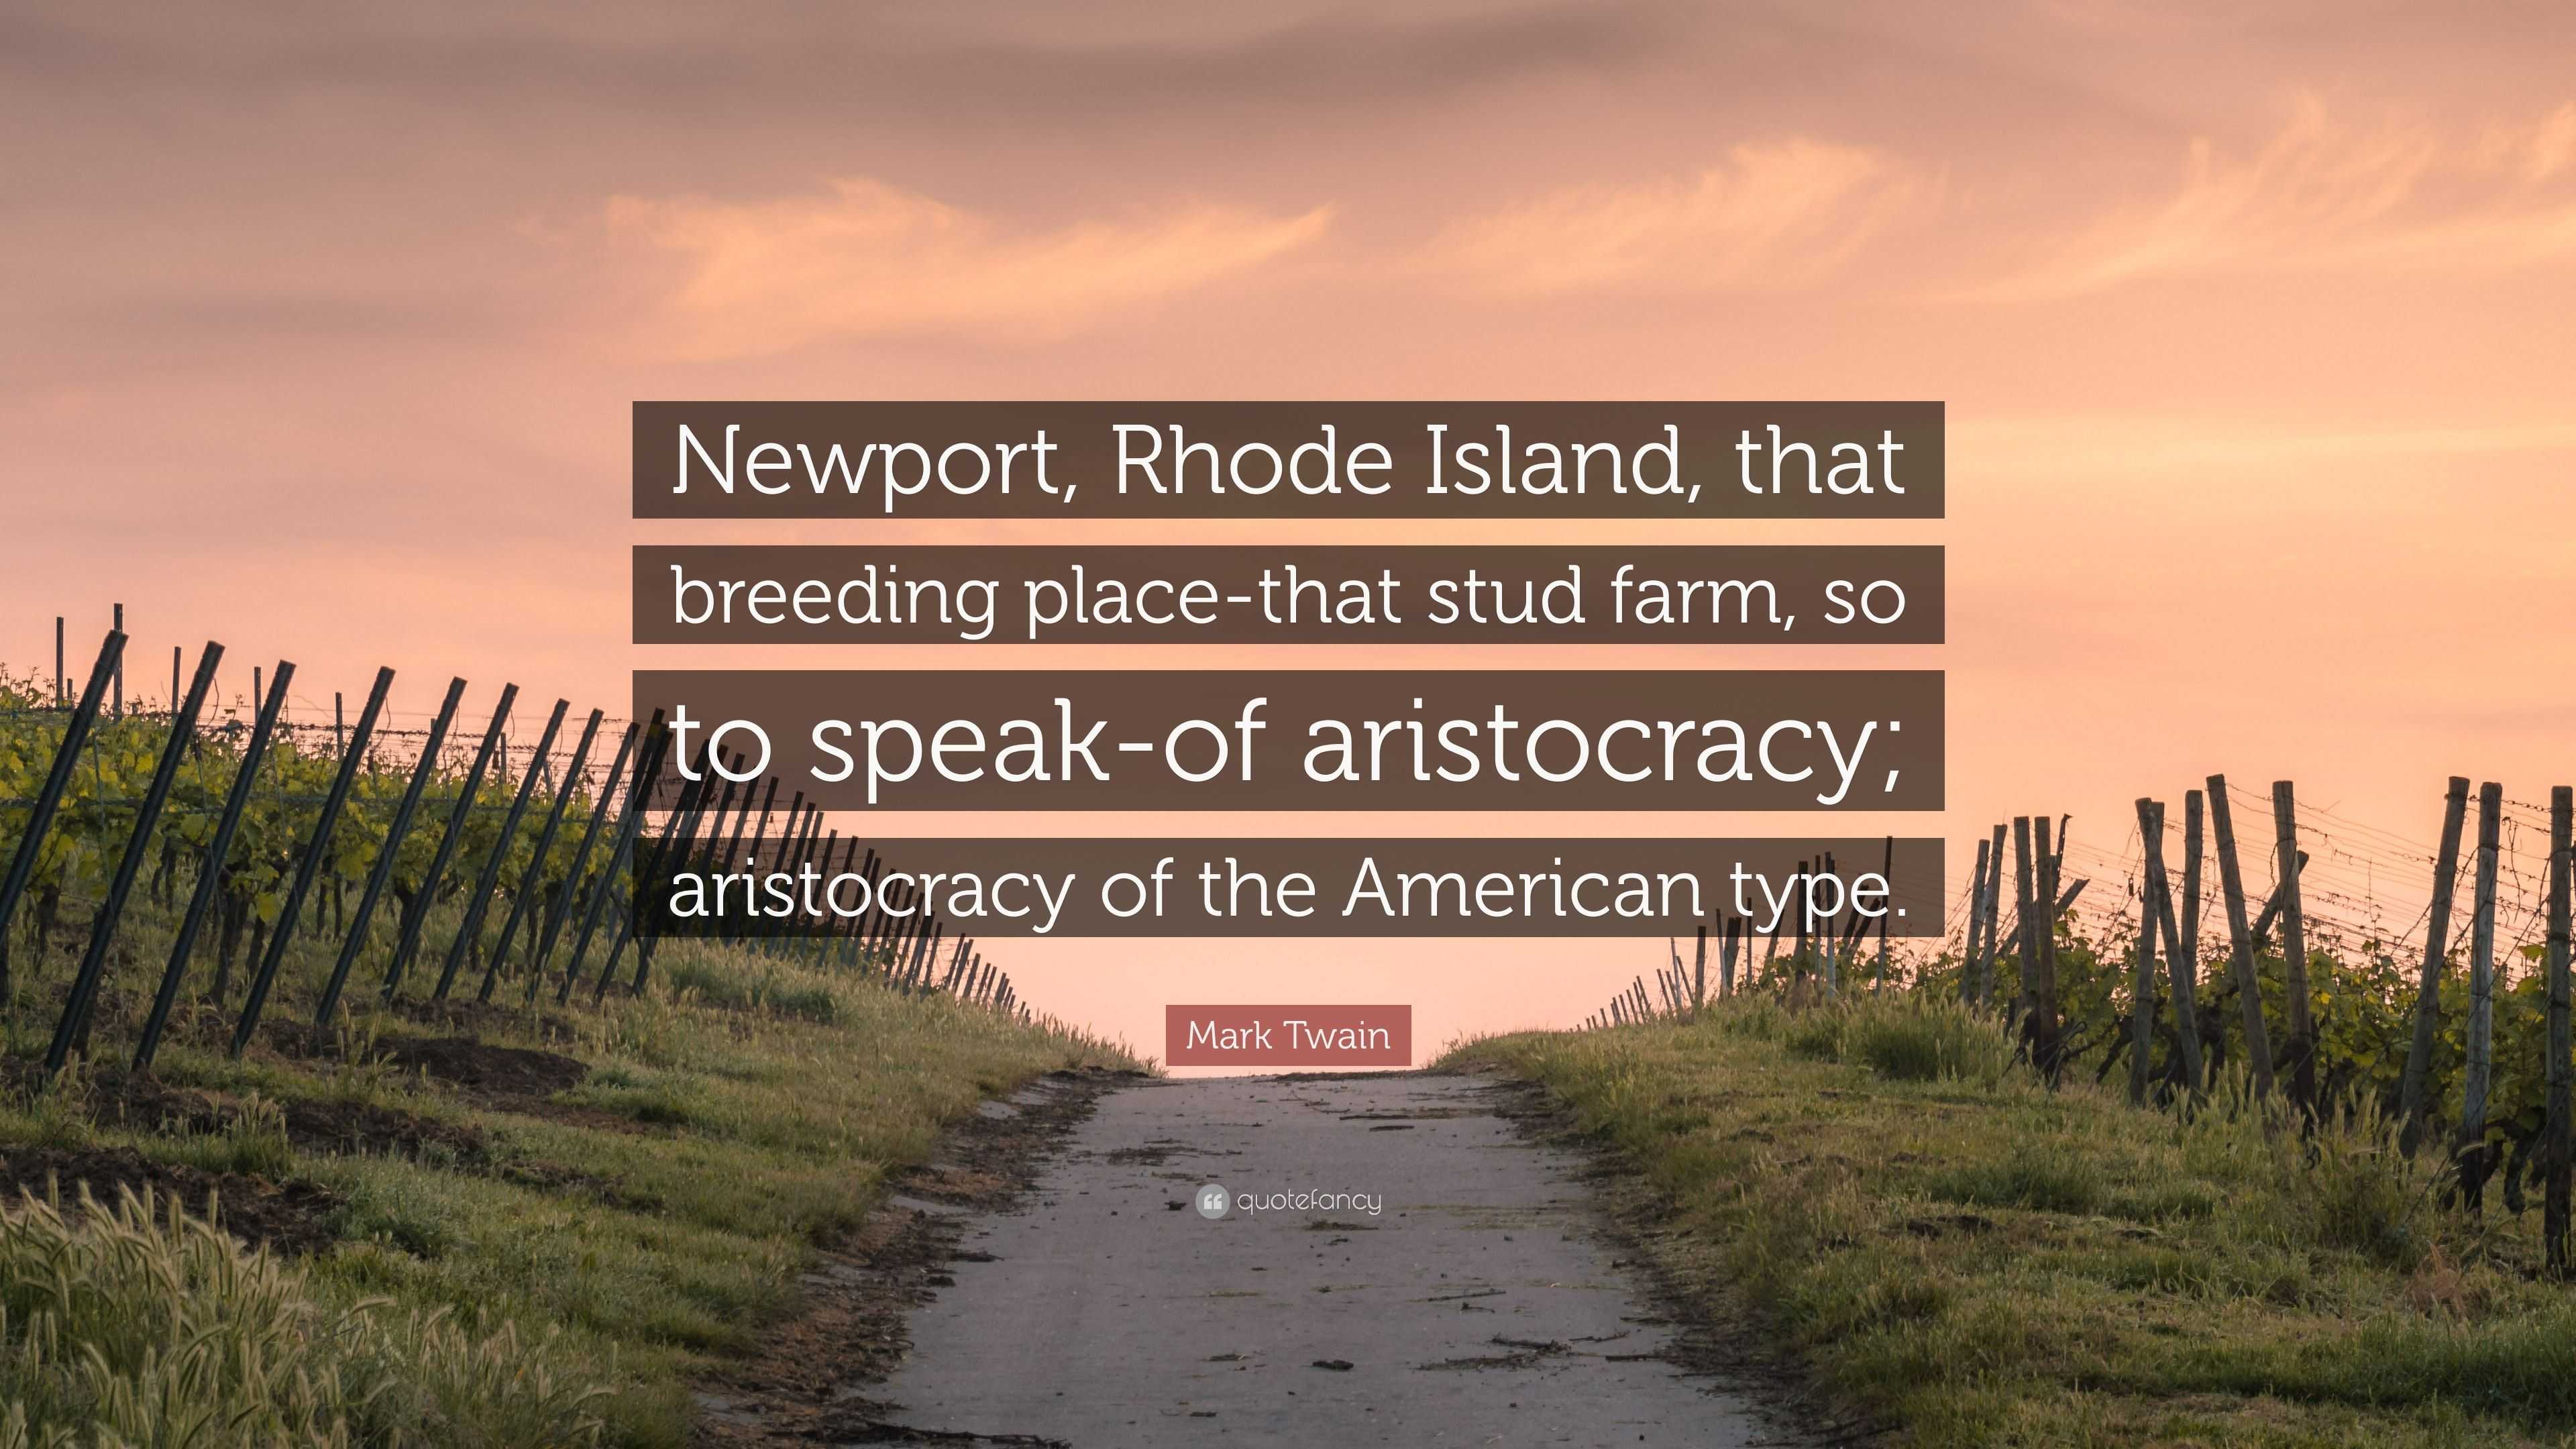 Mark Twain Quote: “Newport, Rhode Island, that breeding place-that stud